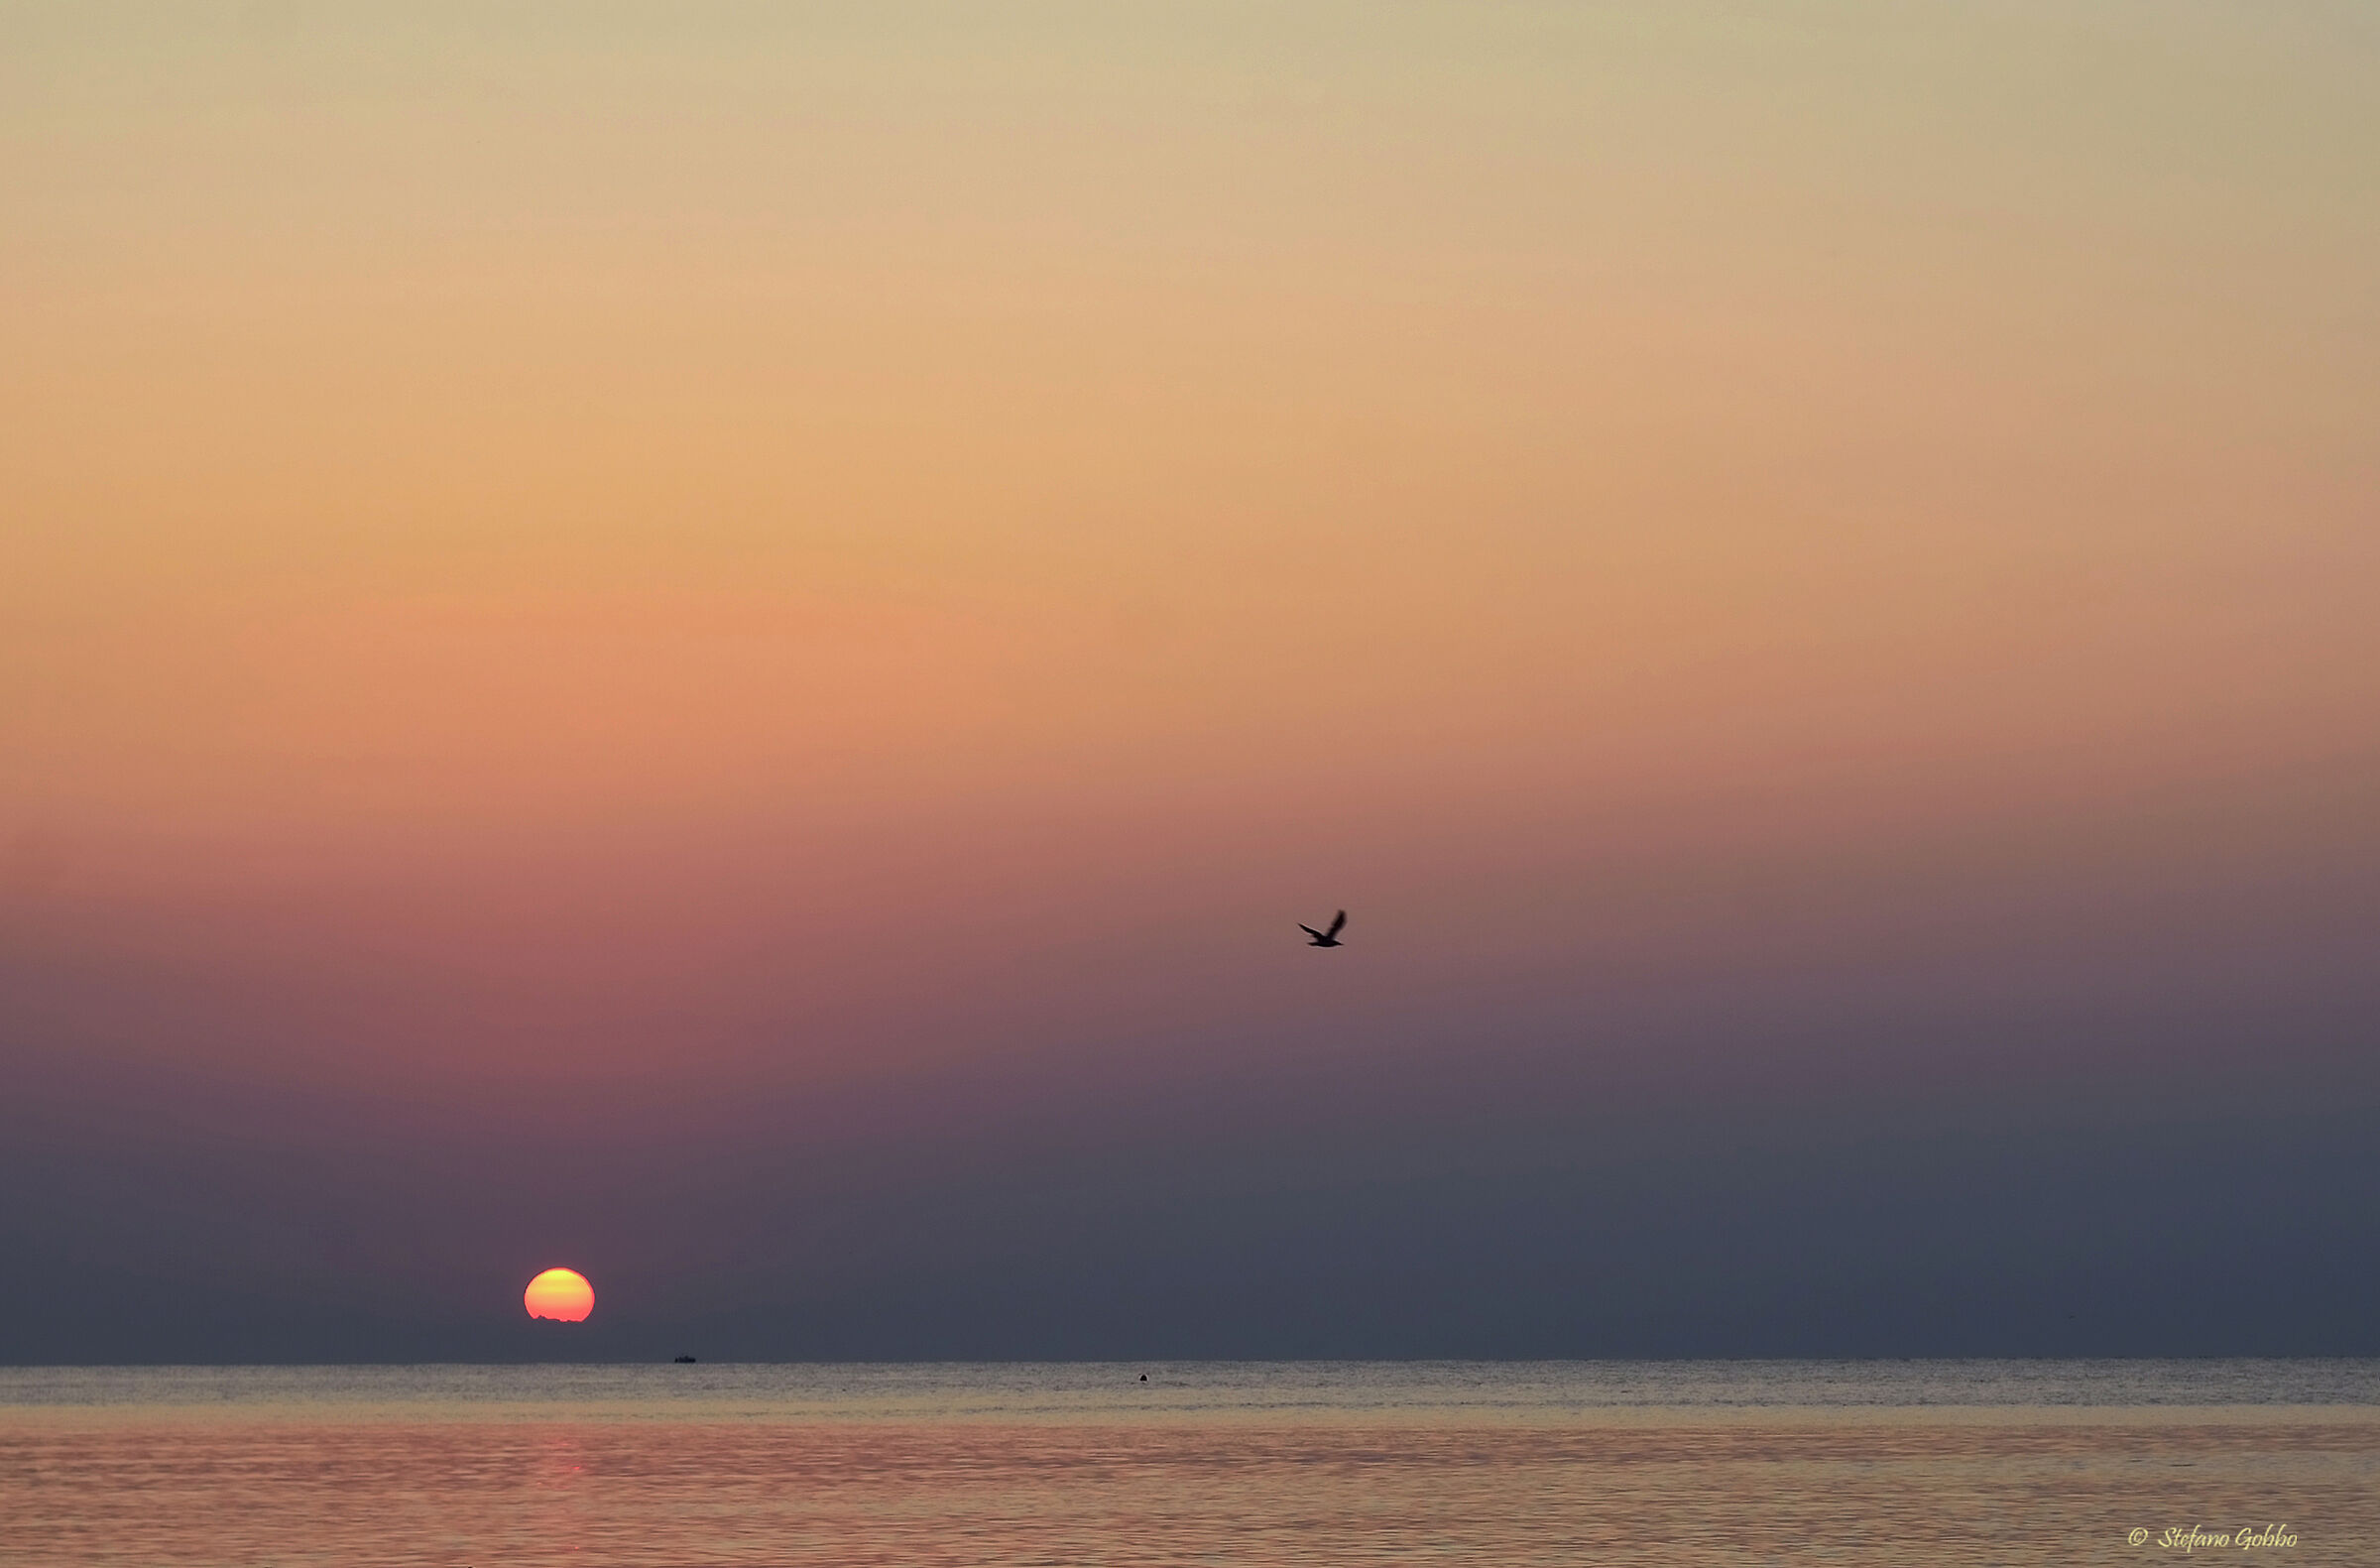 Sunrise with canoe and seagull...